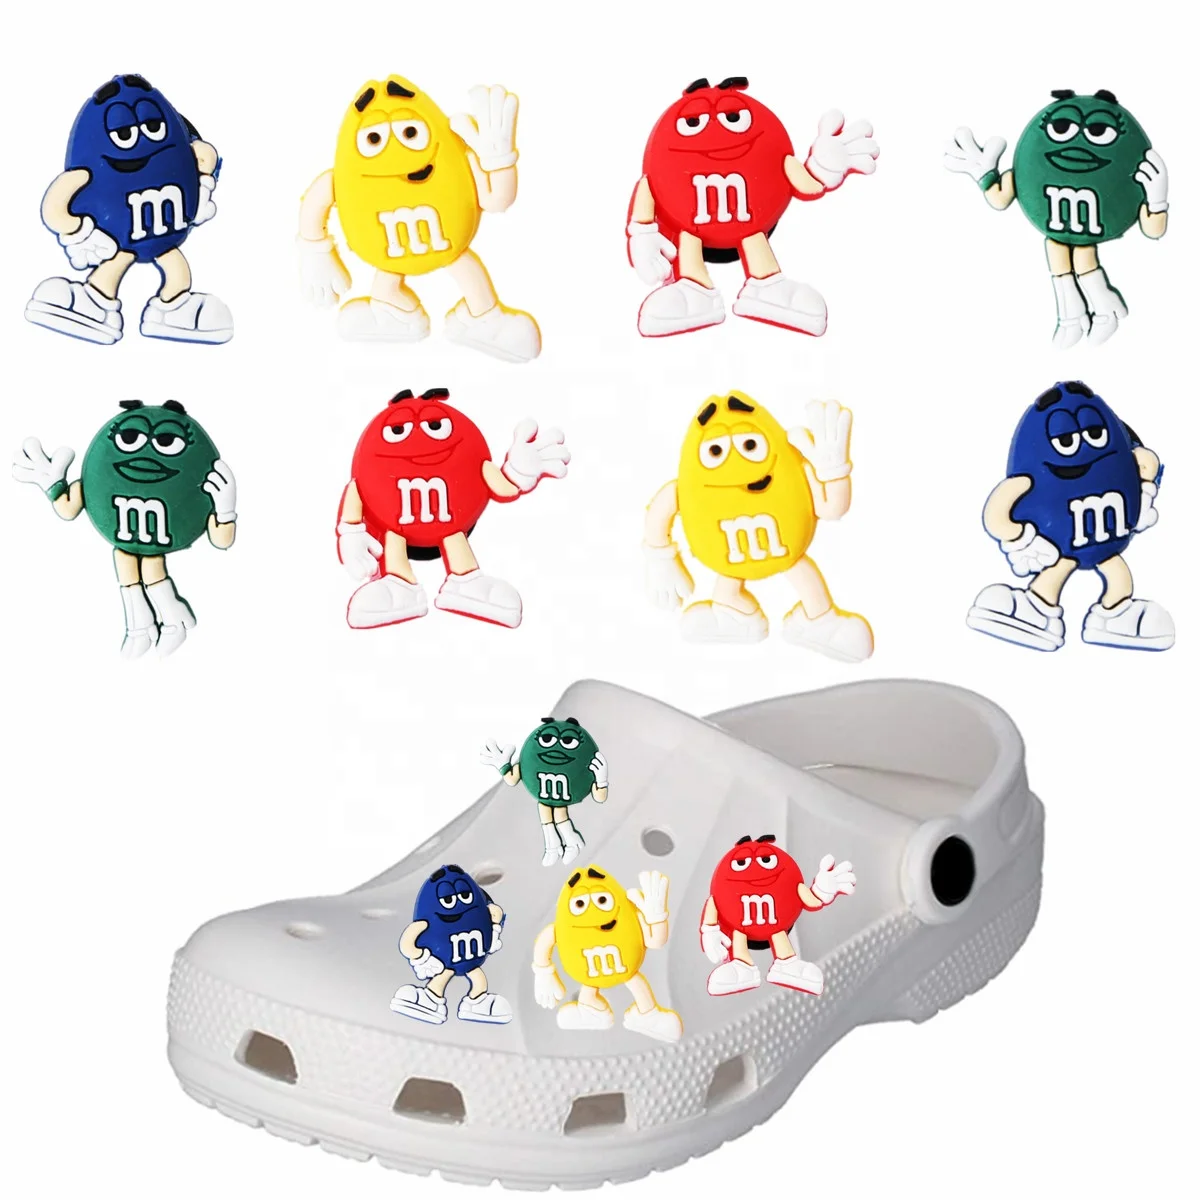 

Cartoon Figures beans Wholesale PVC Plastic Shoe charms Buckles fit for Clog MM Shoes croc charms gibz custom, As picture